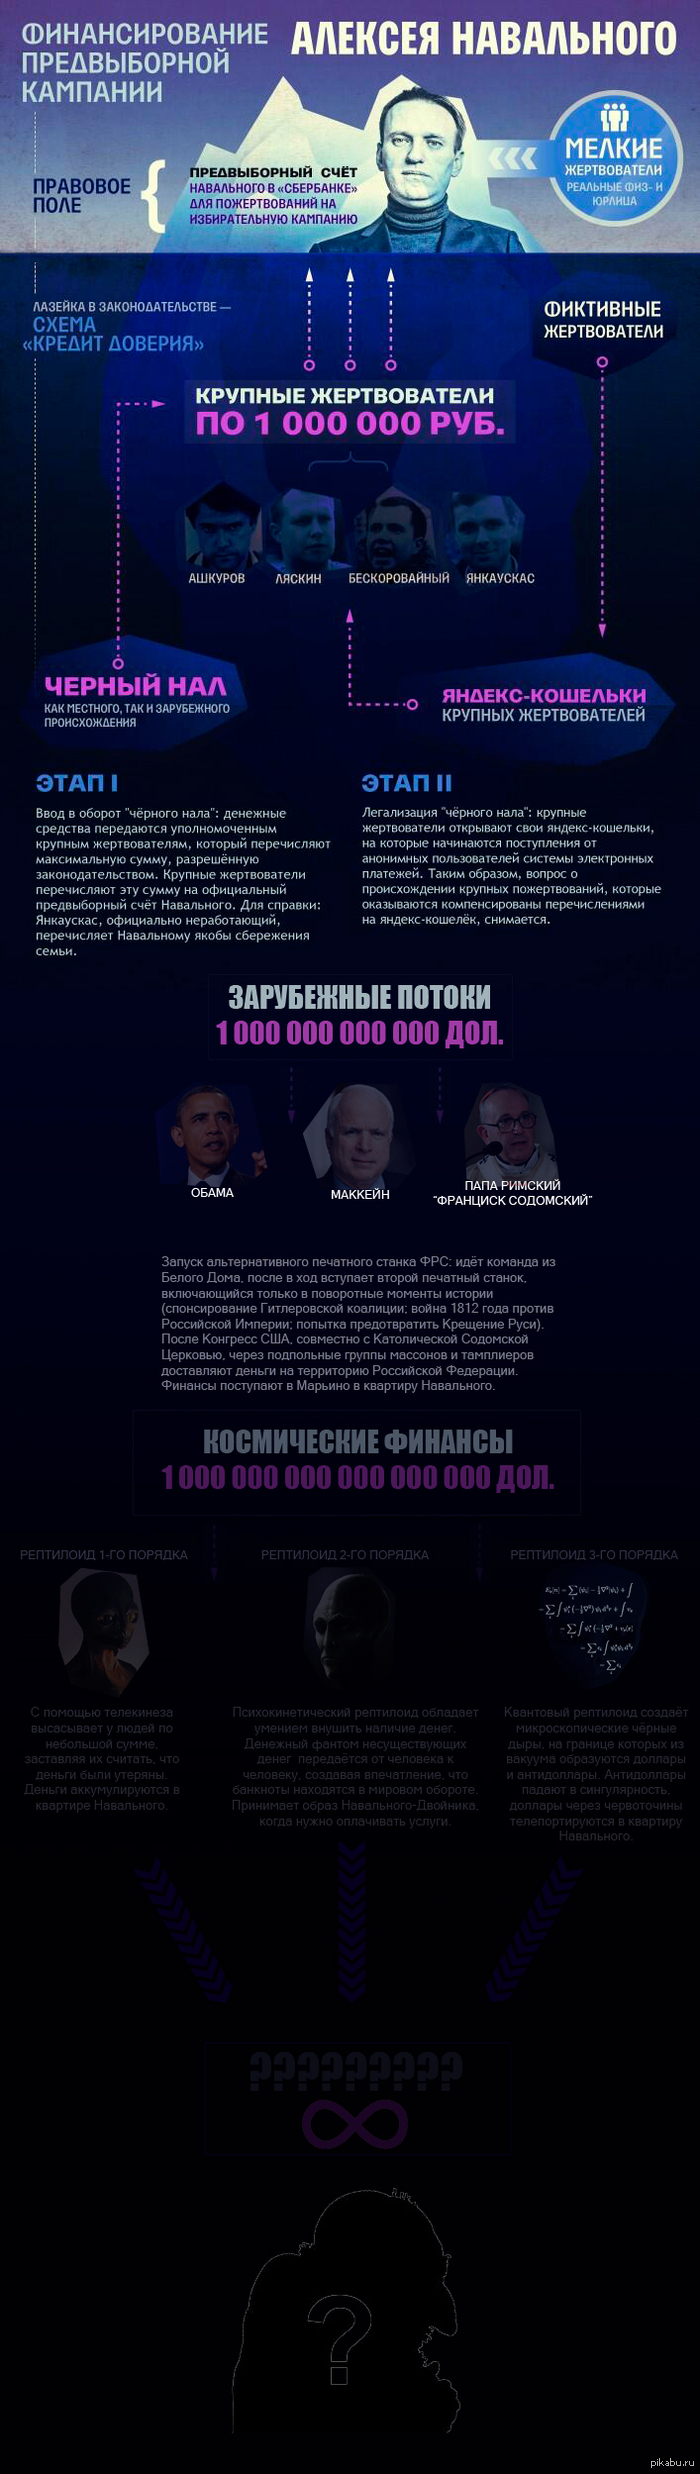 Financing the election campaign of Alexei Navalny - Infographics, Politics, Alexey Navalny, Reptilians, Conspiracy, Longpost